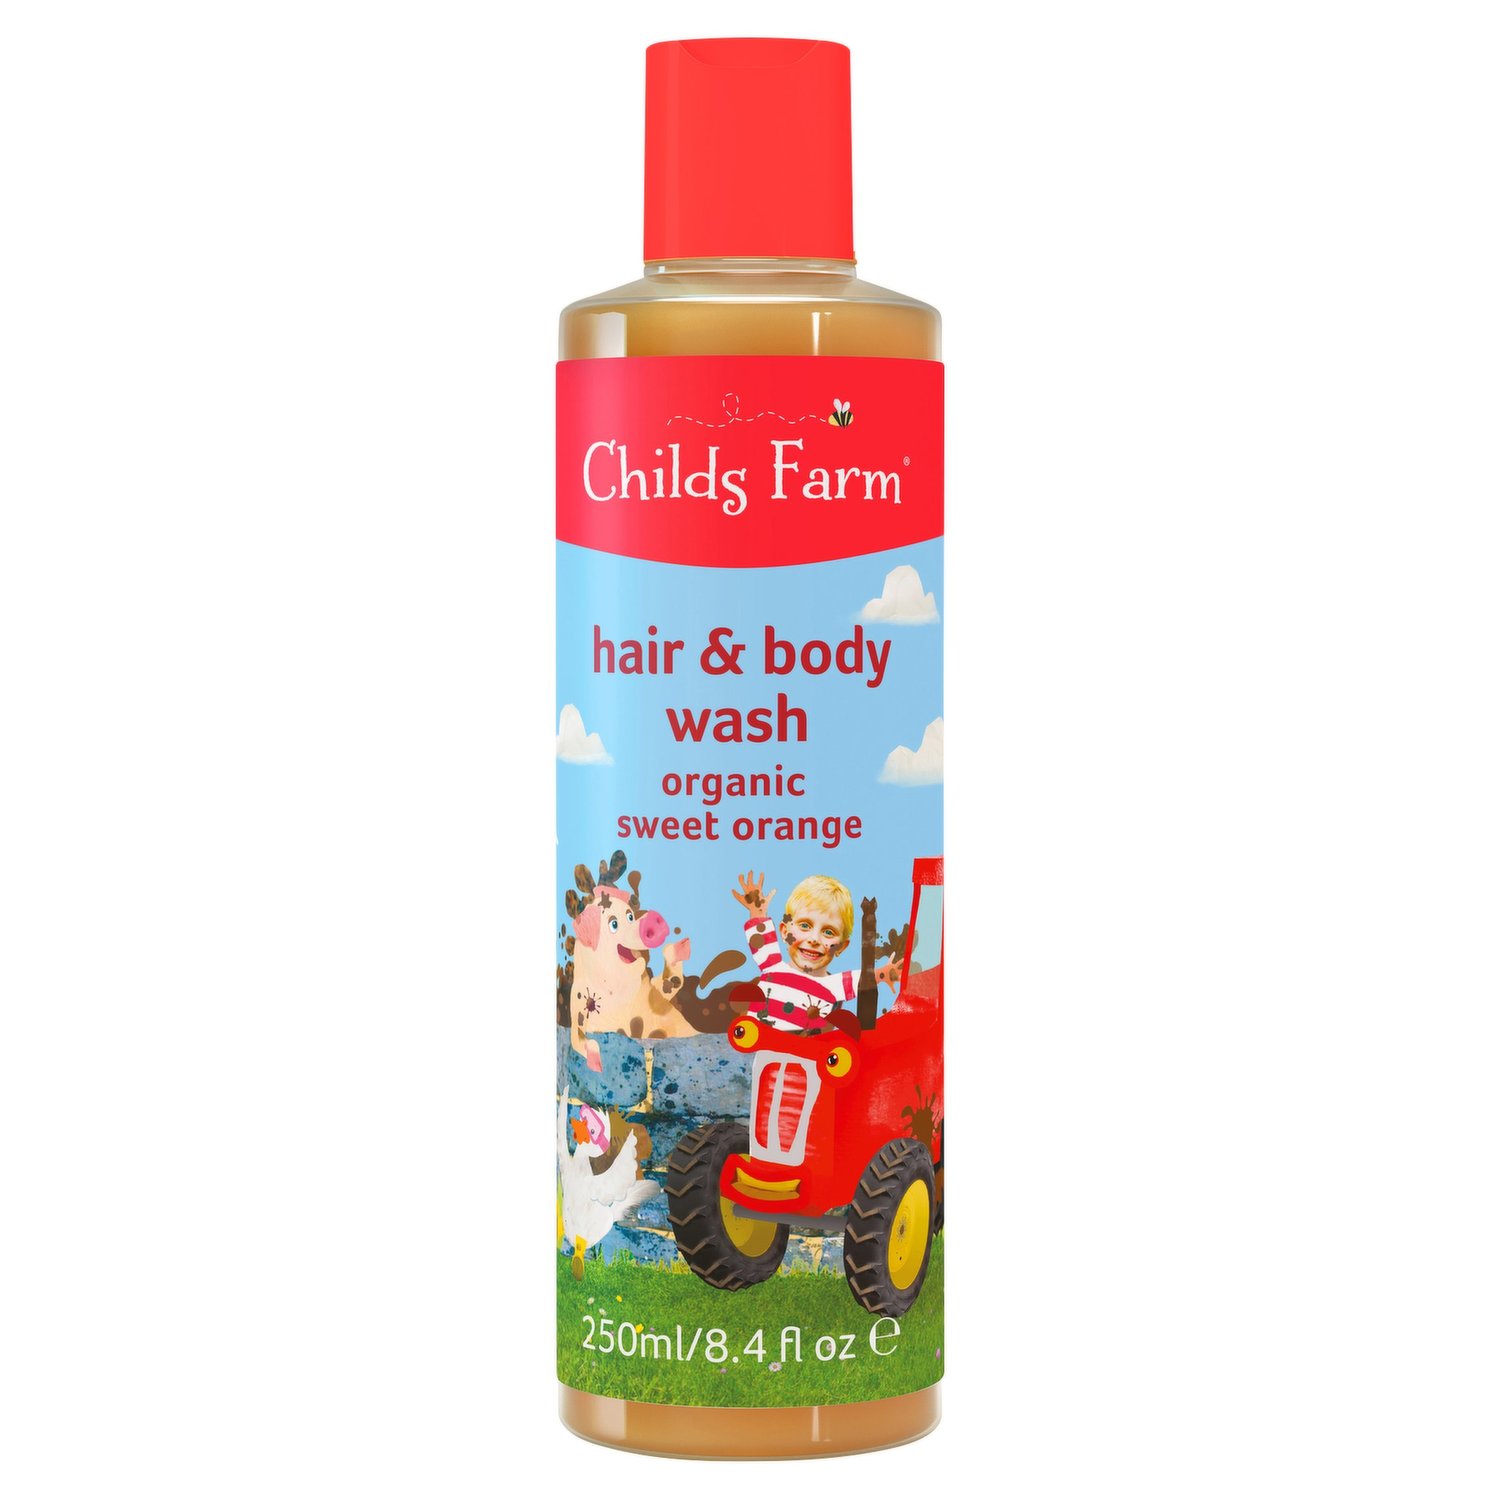 Childs Farm Organic Sweet Orange Hair & Body Wash, 250ml